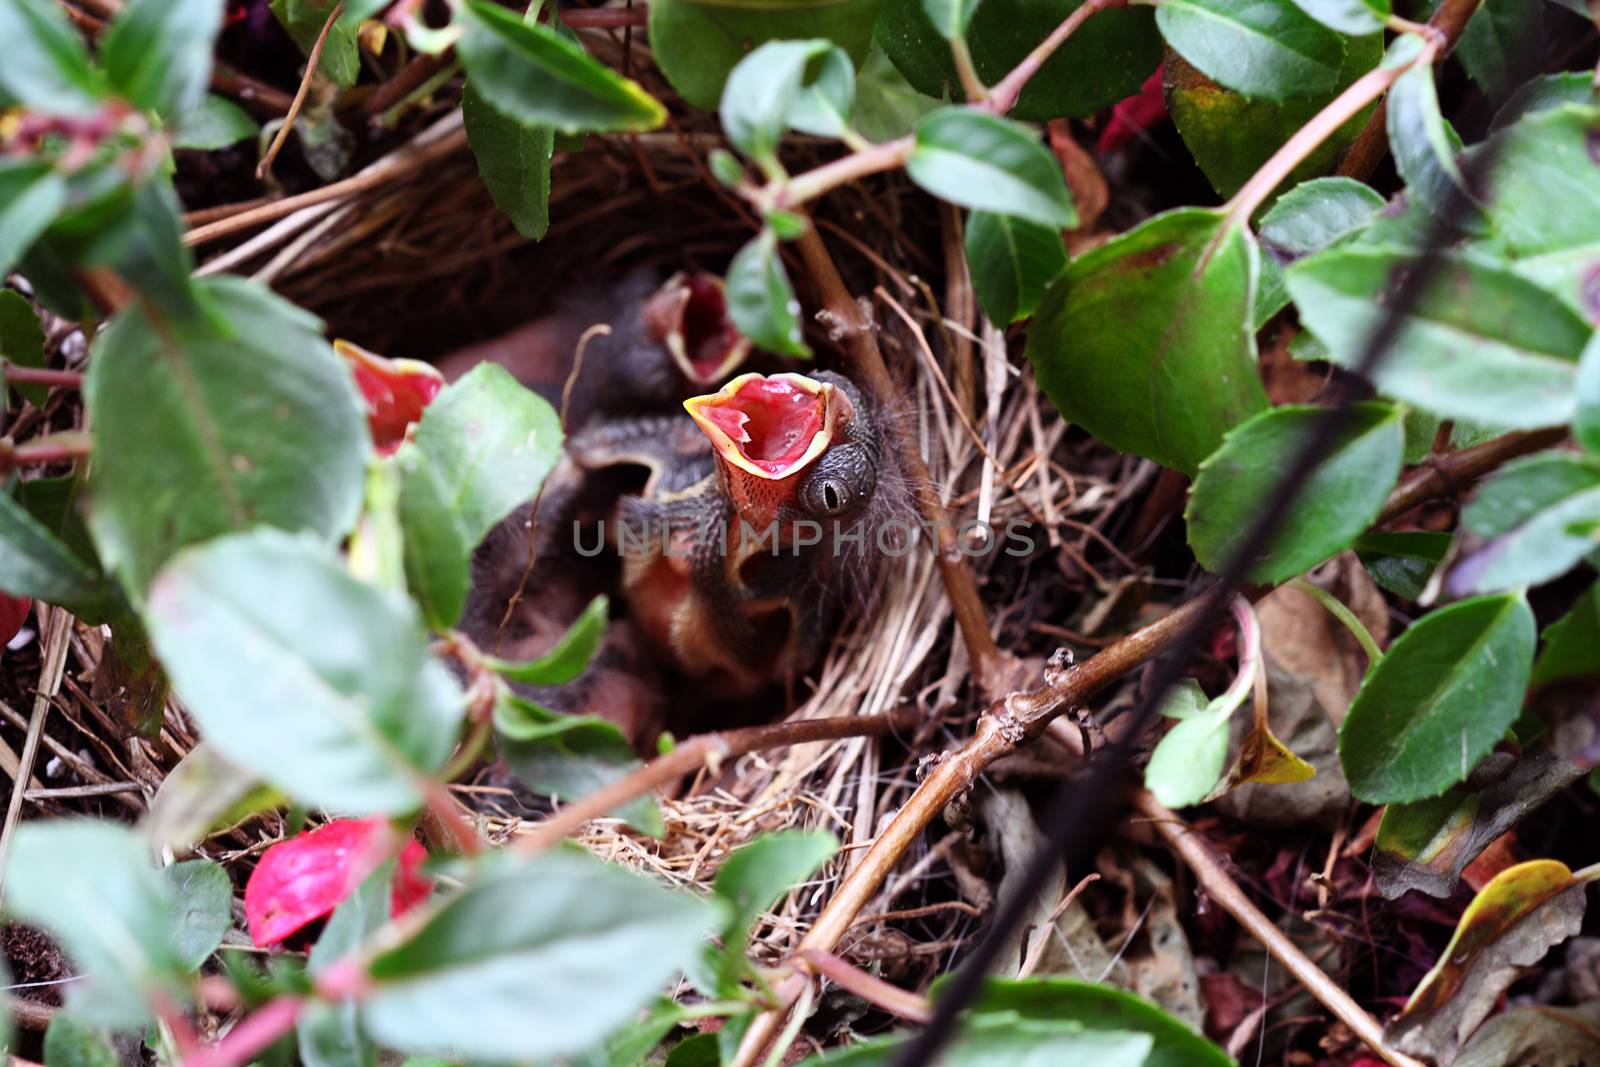 Baby Sparrow in a Nest by StephanieFrey